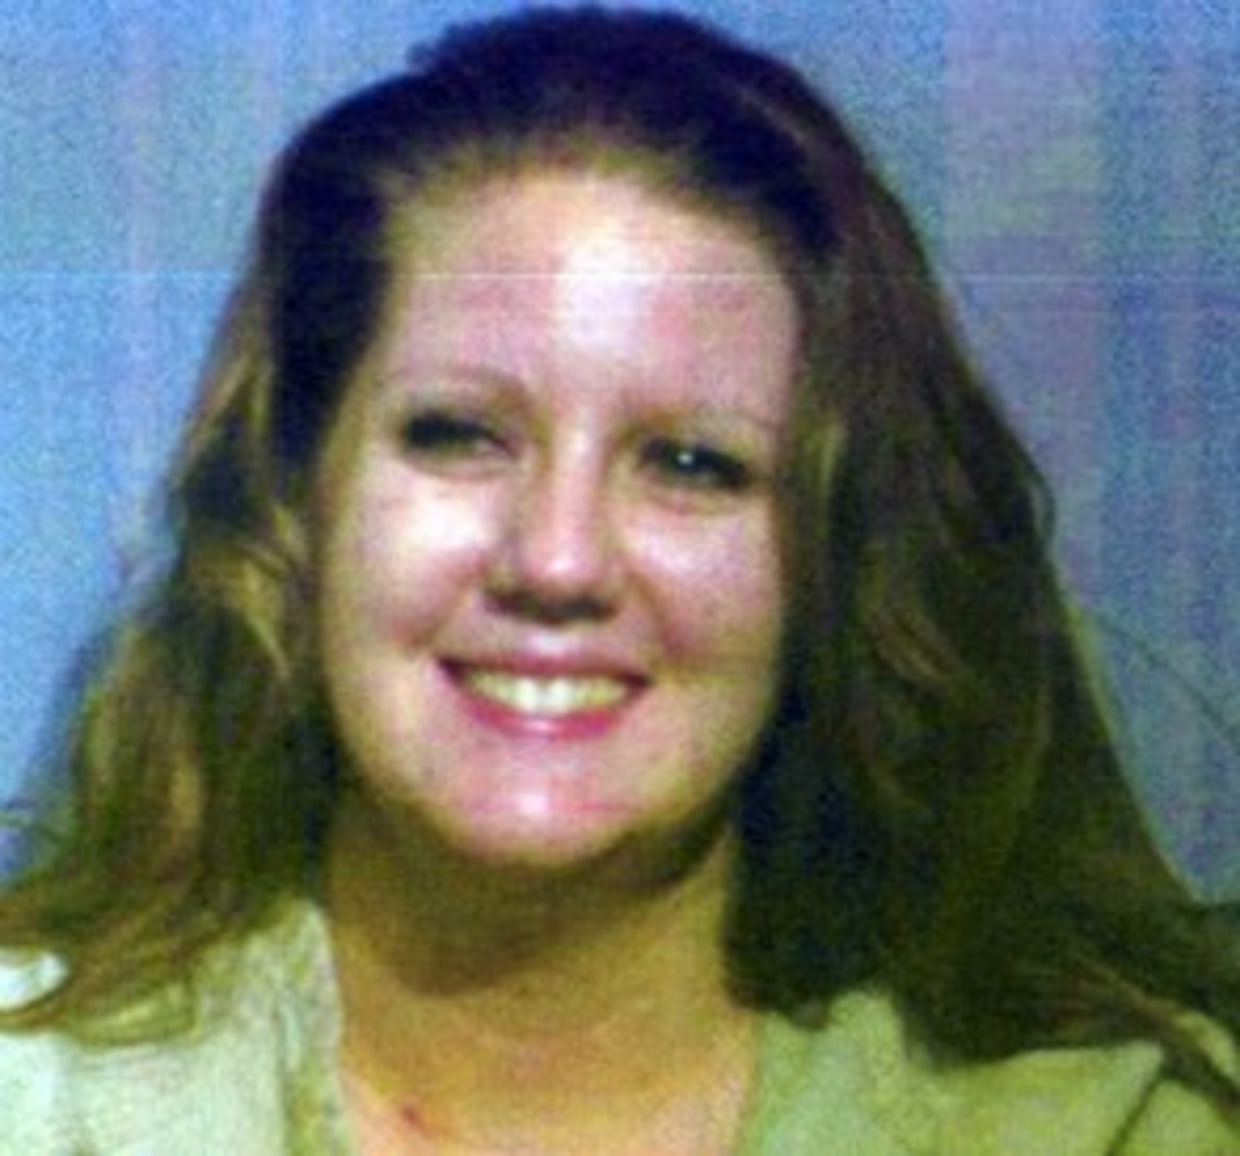 Sun Rape Mom Jabardasti Xxx Video - Ohio mom accused of raping 10-month-old son